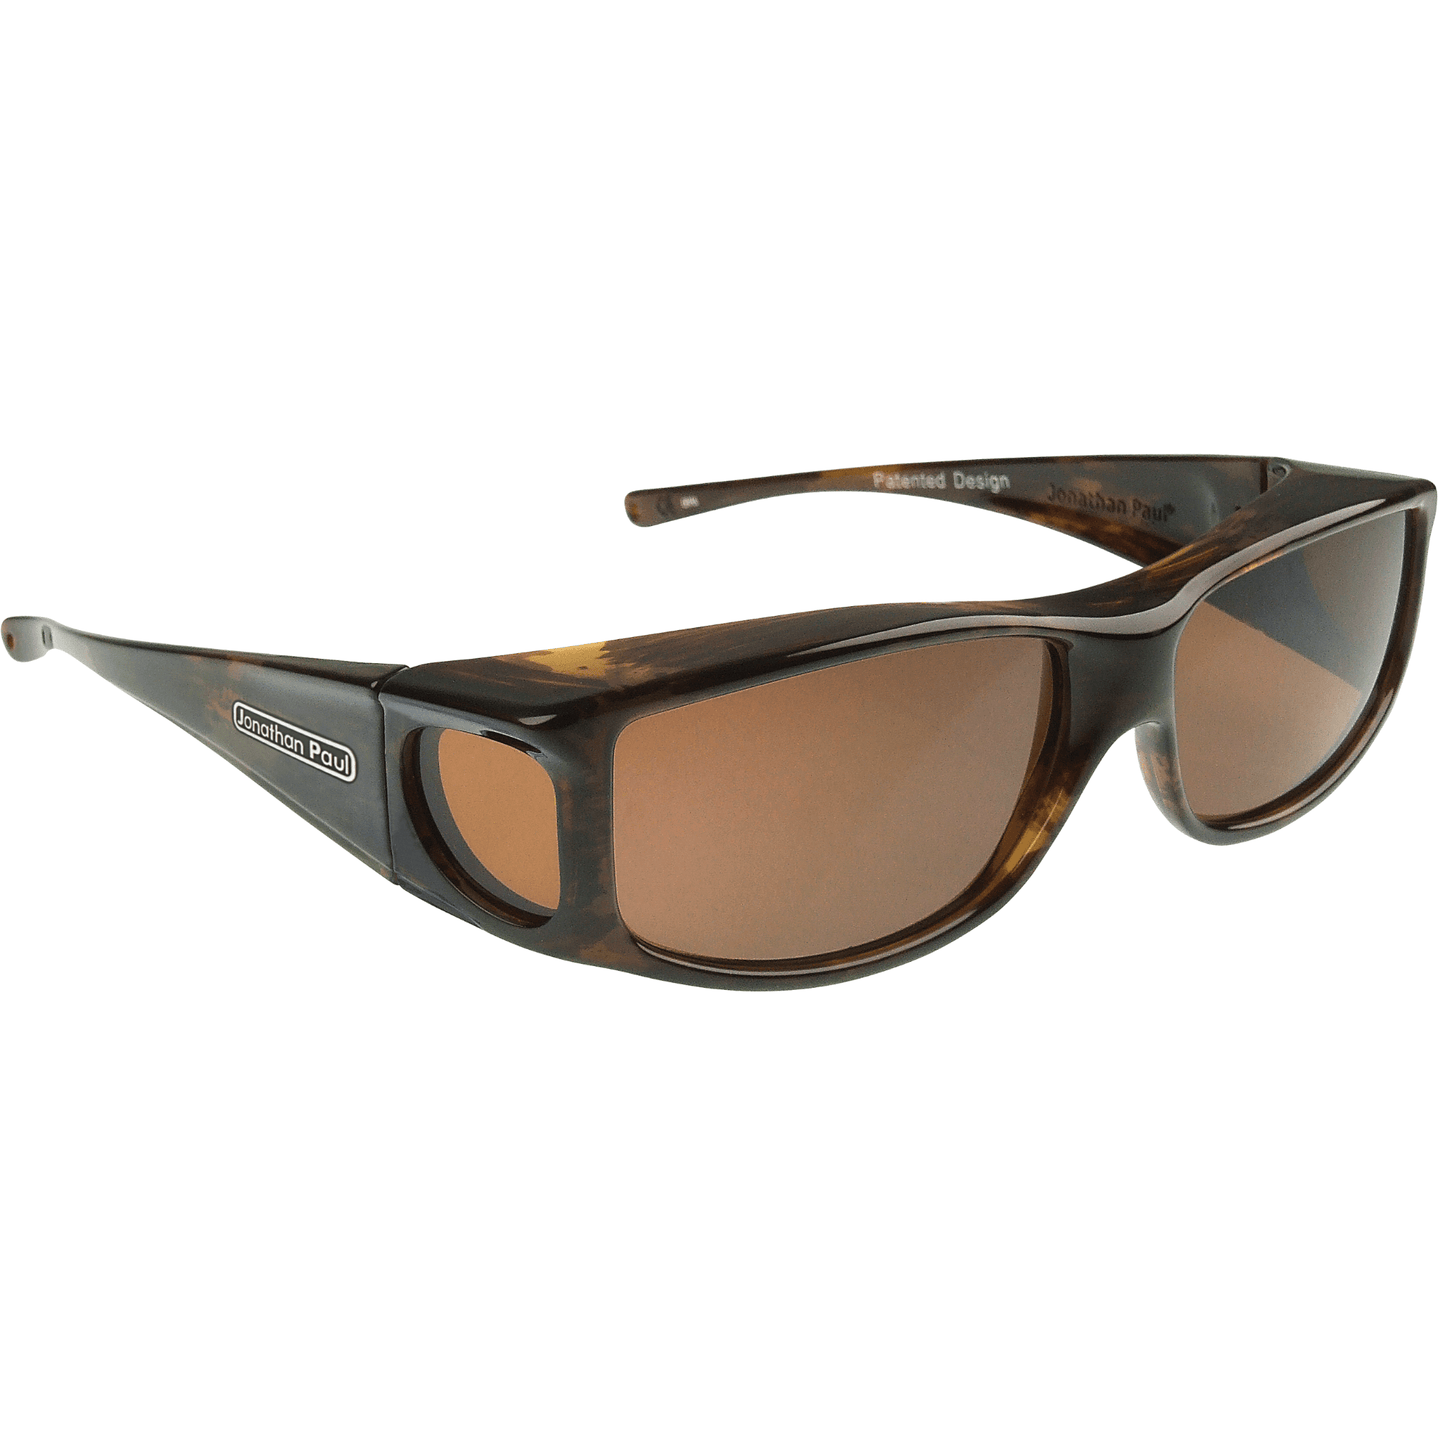 Fitover Sunglasses 'Jett' Brown Marble - Amber Lens